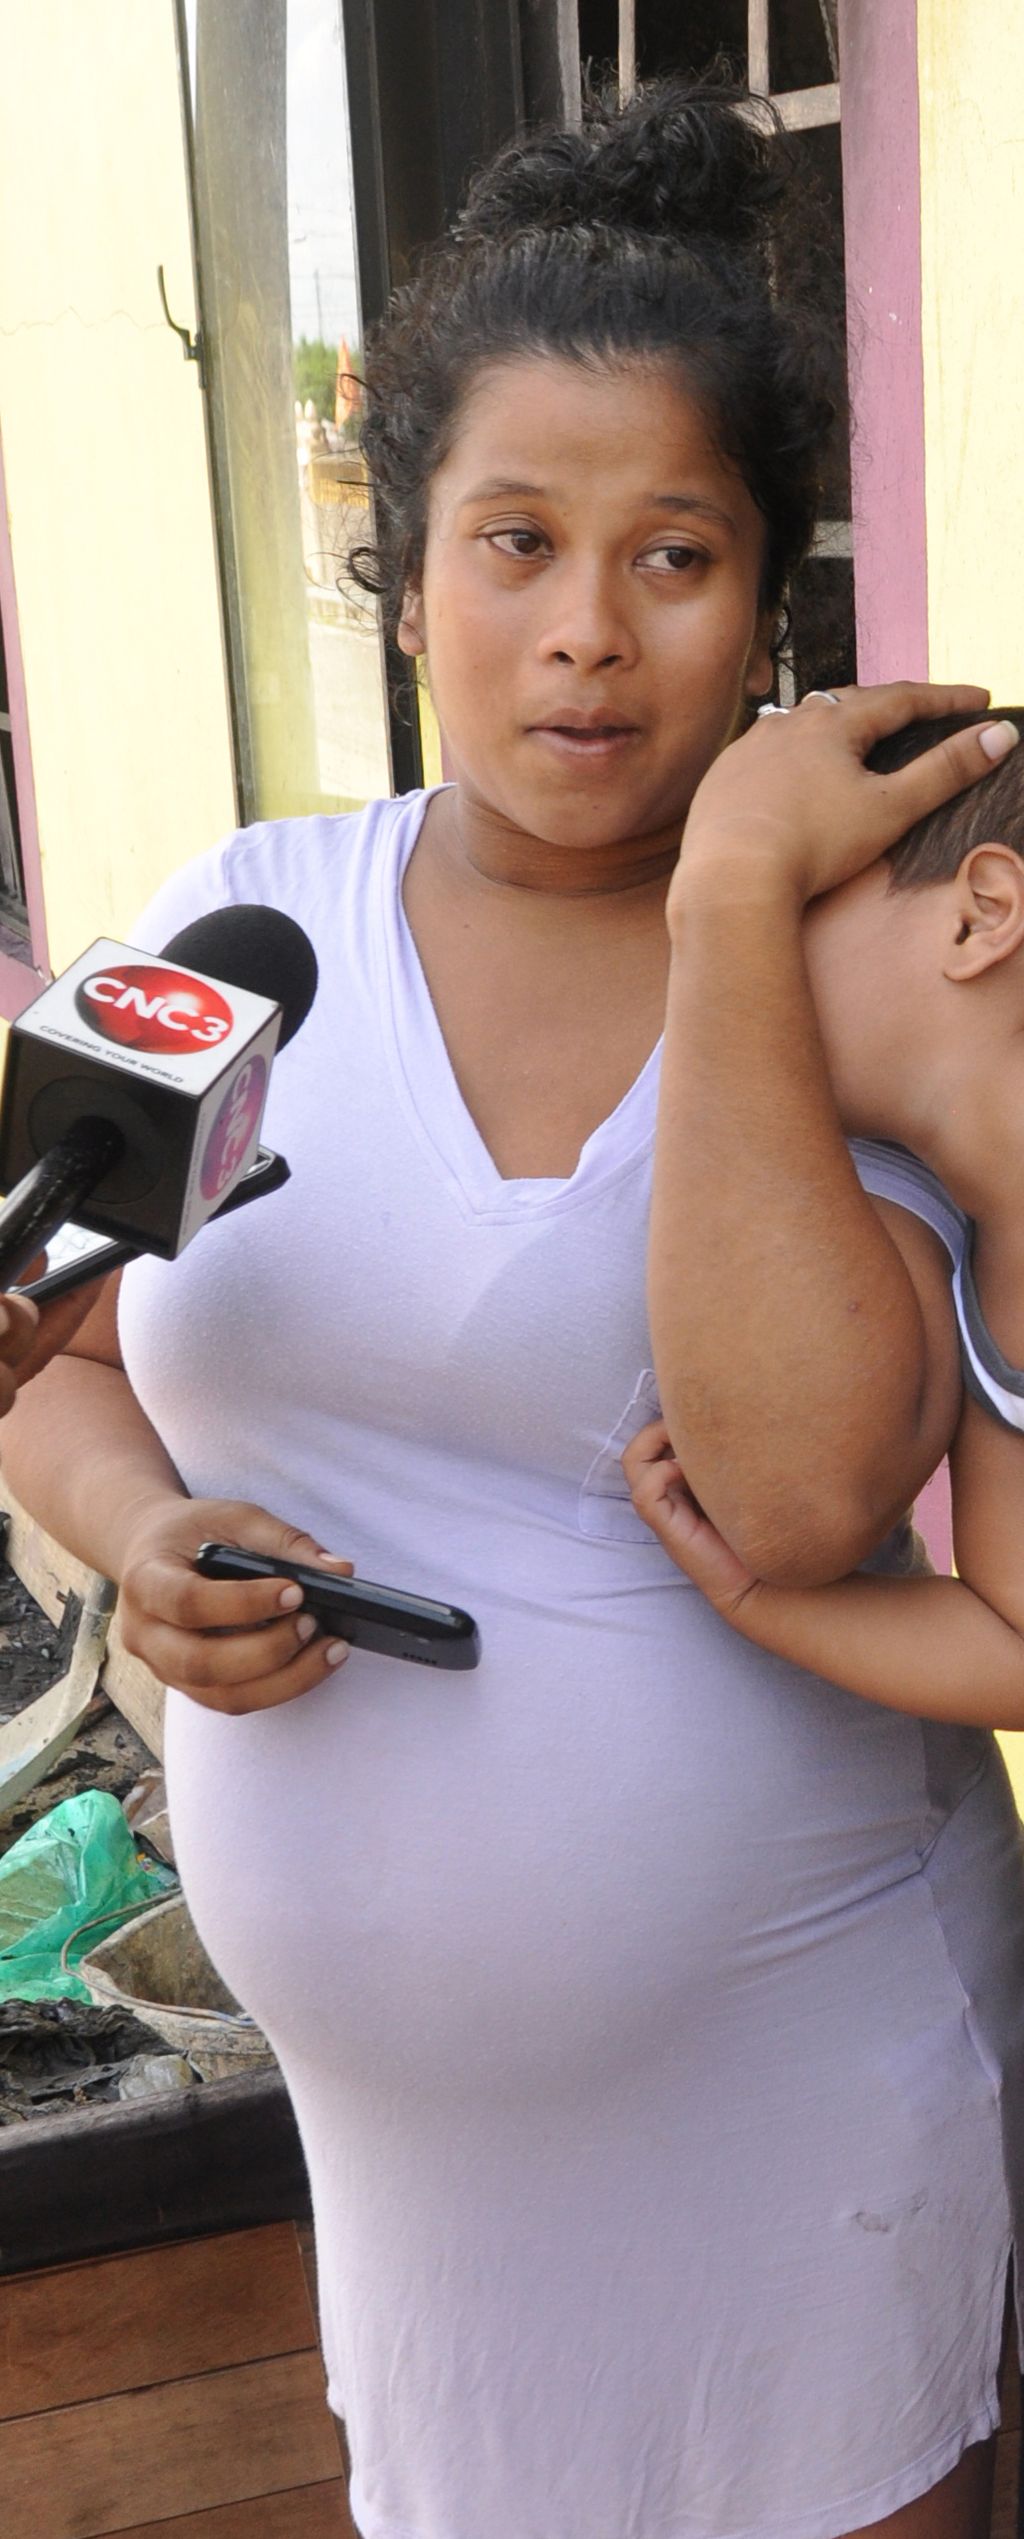 Fire victim gives birth - Trinidad Guardian